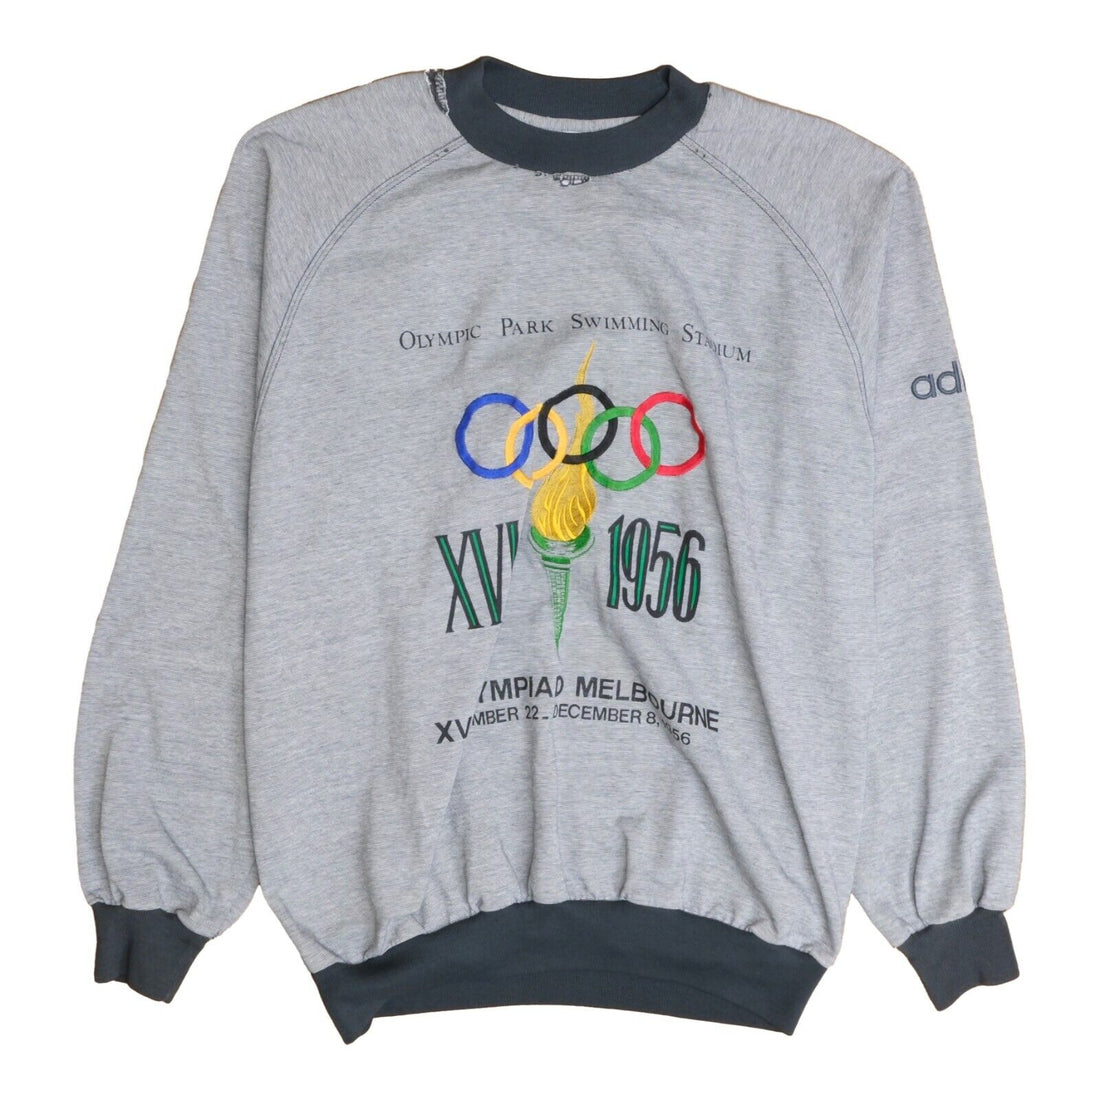 Vintage Adidas XVI Olympiad Melbourne 1956 Swimming Olympics Sweatshirt Large